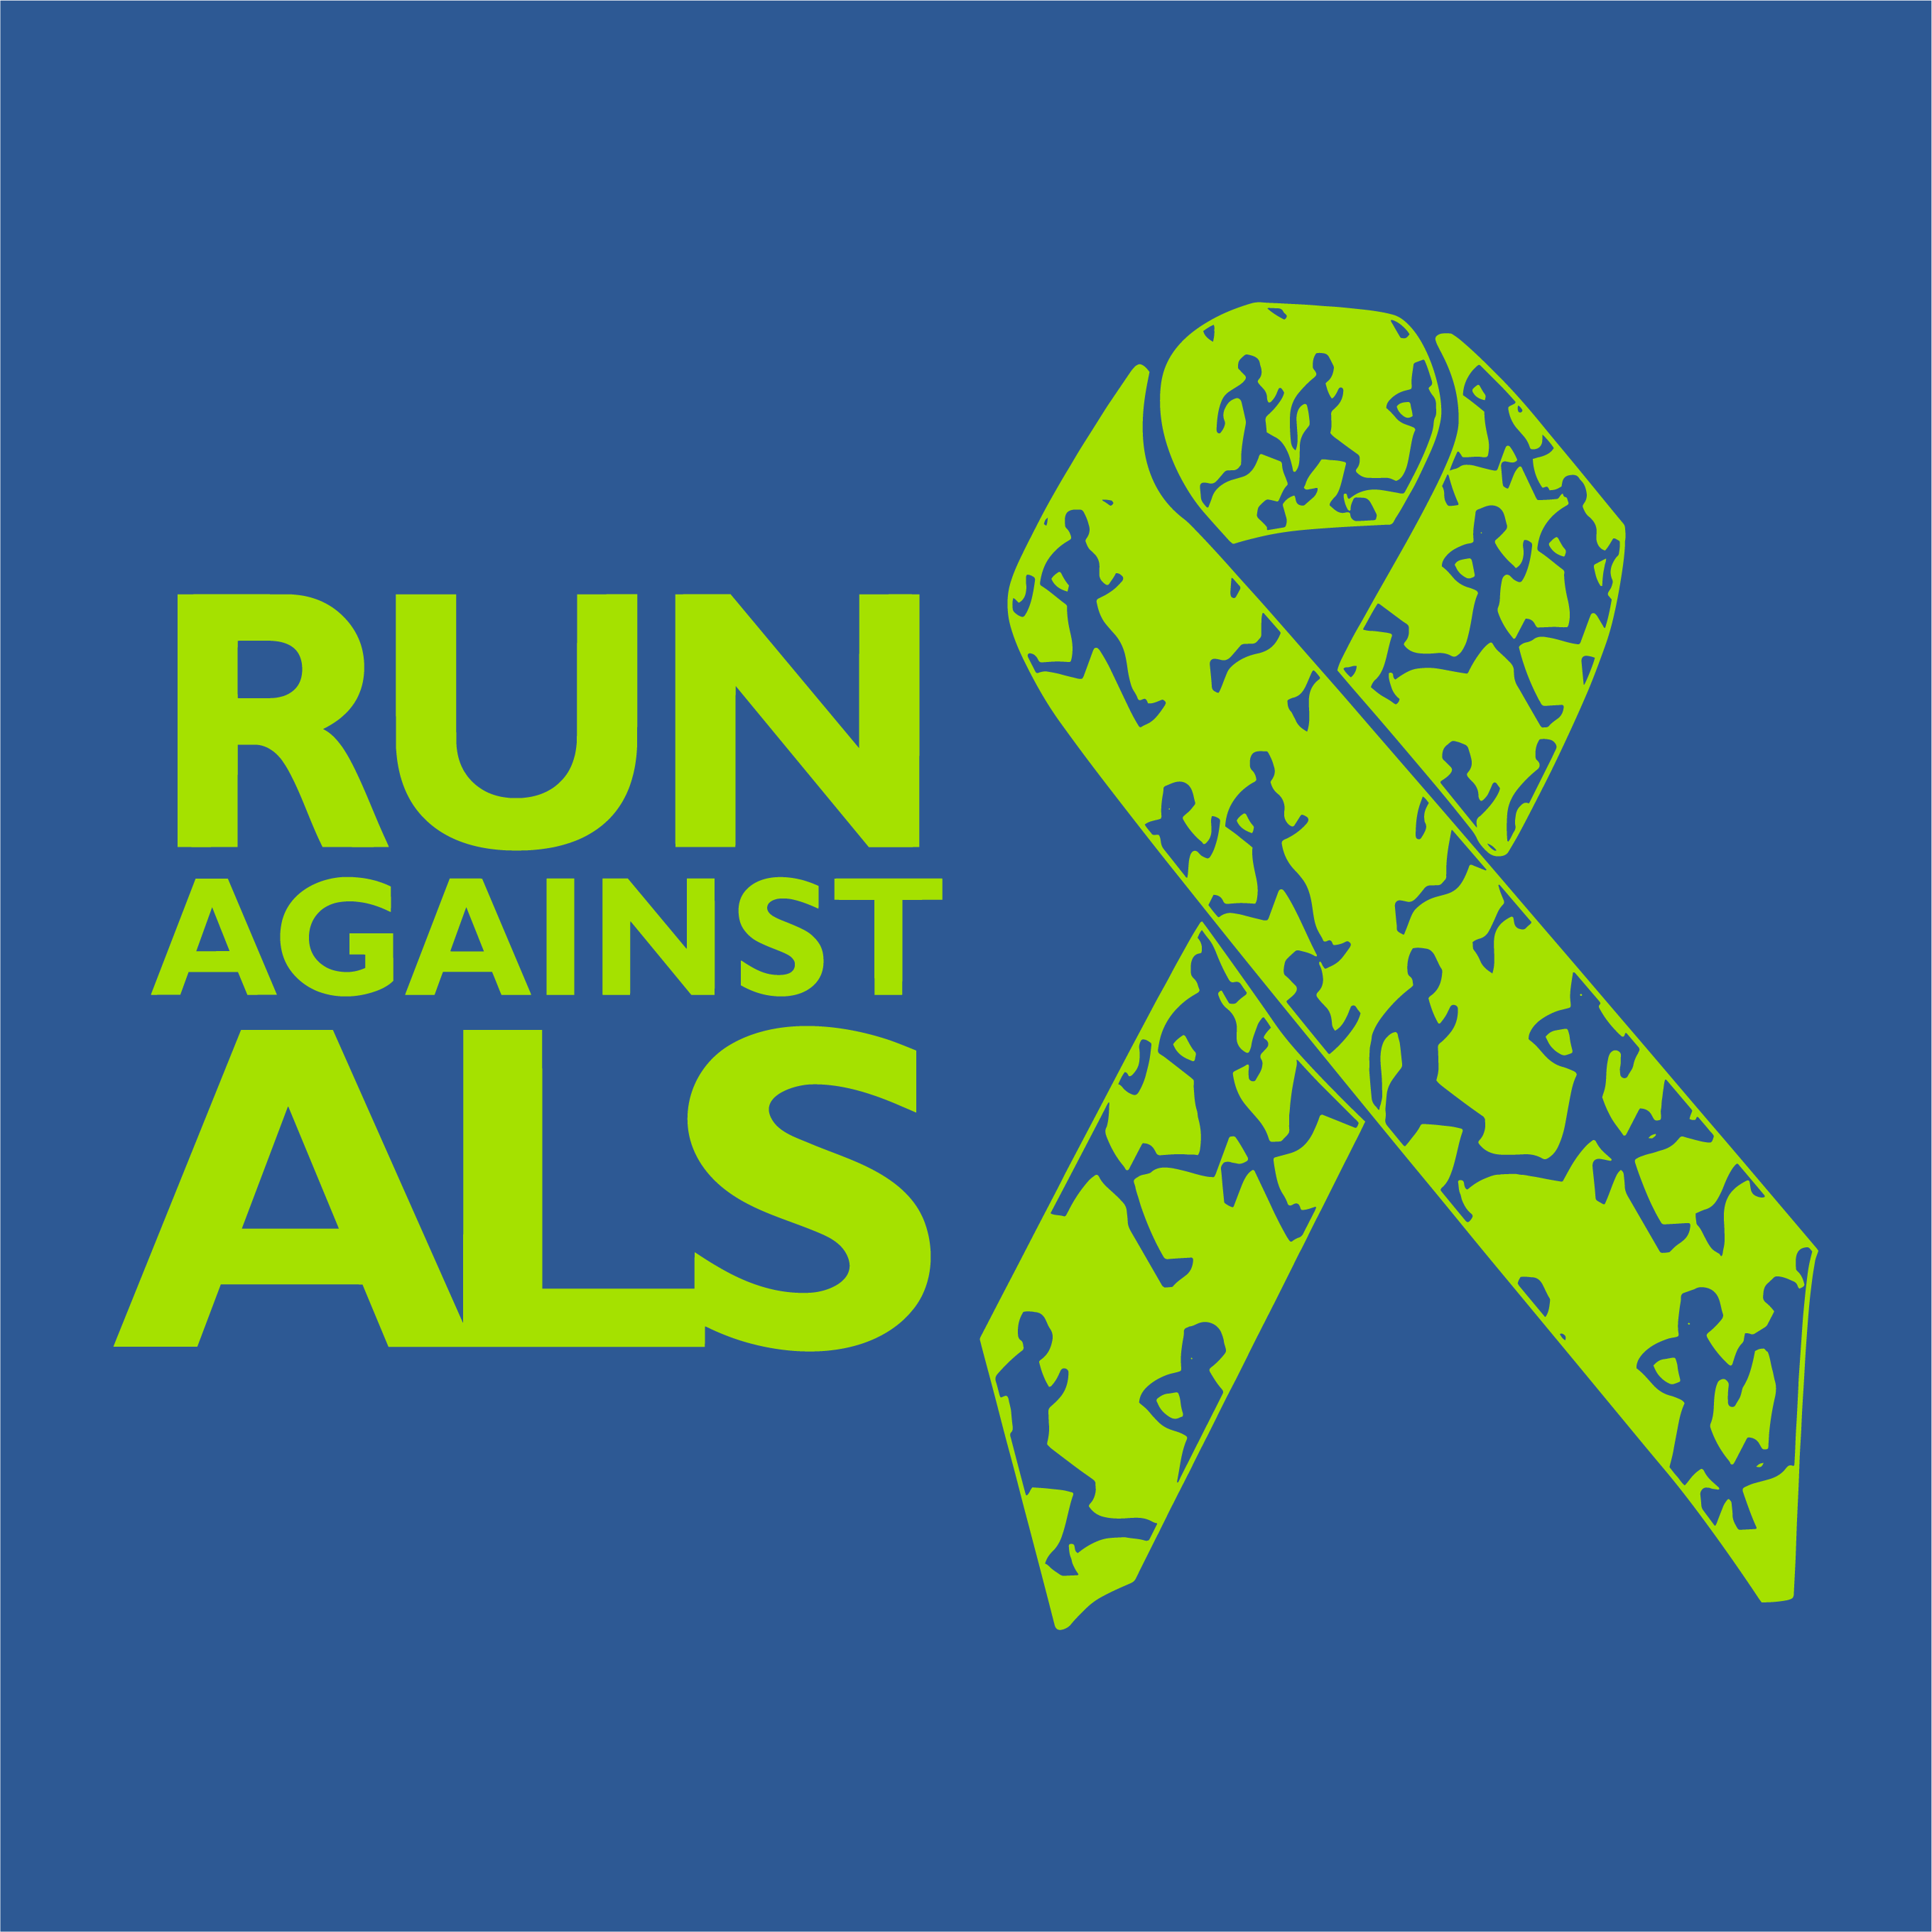 Run Against ALS shirt design - zoomed